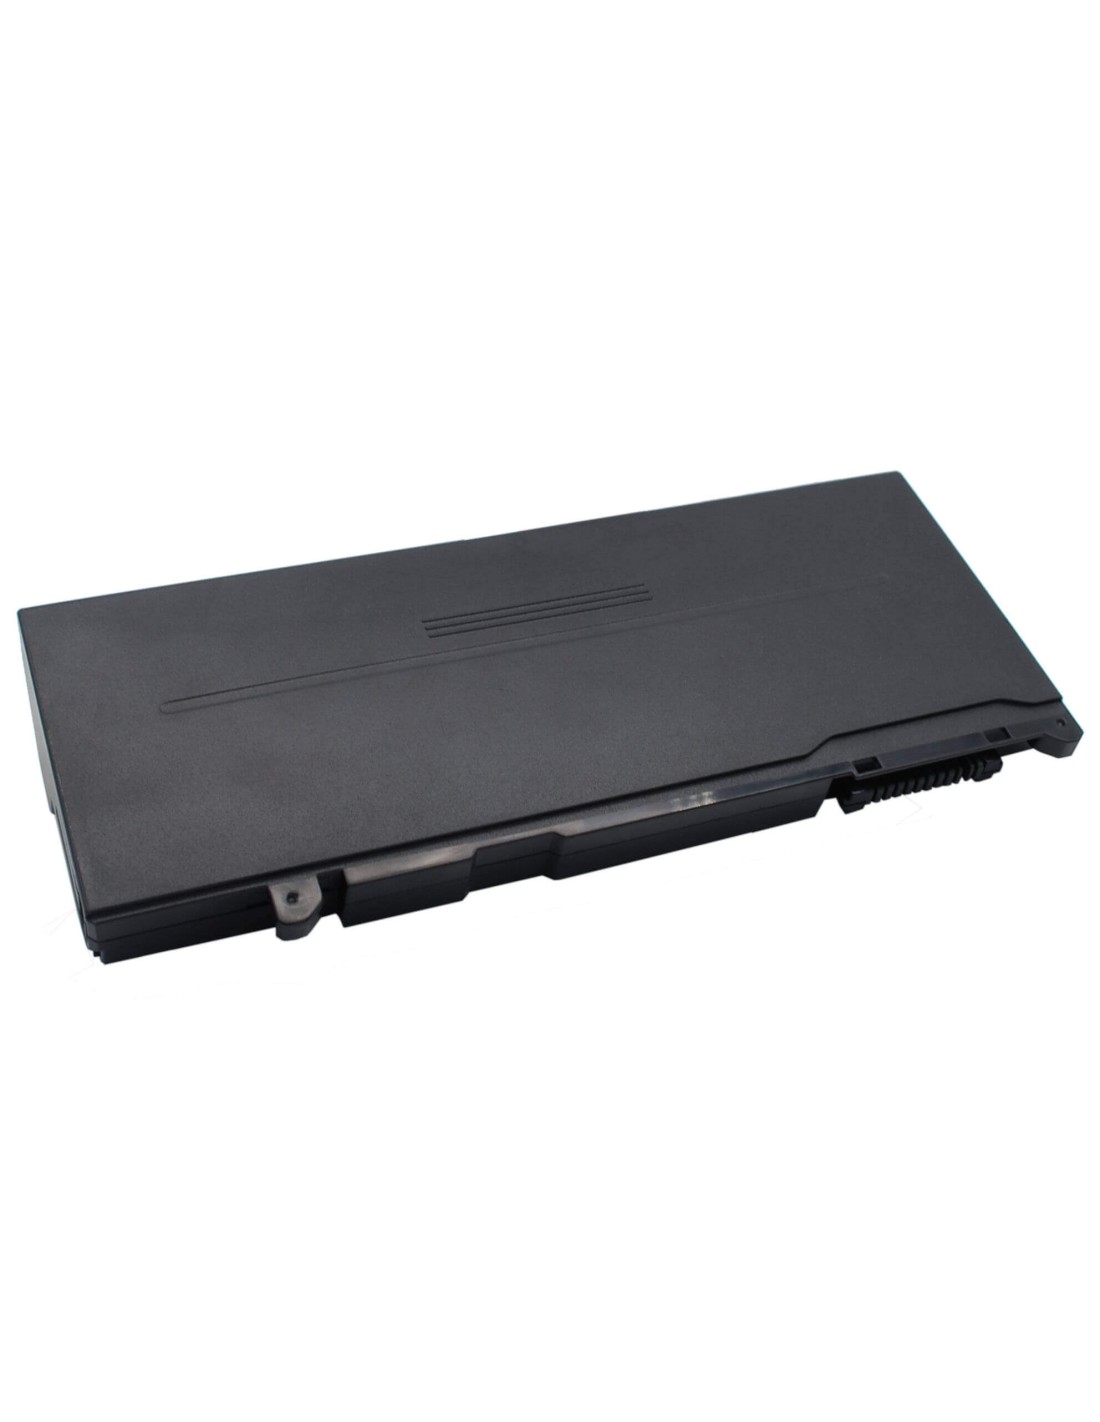 Black Battery for Toshiba Dynabook Tx, Tecra A9, Tecra S3-120 10.8V, 8800mAh - 95.04Wh